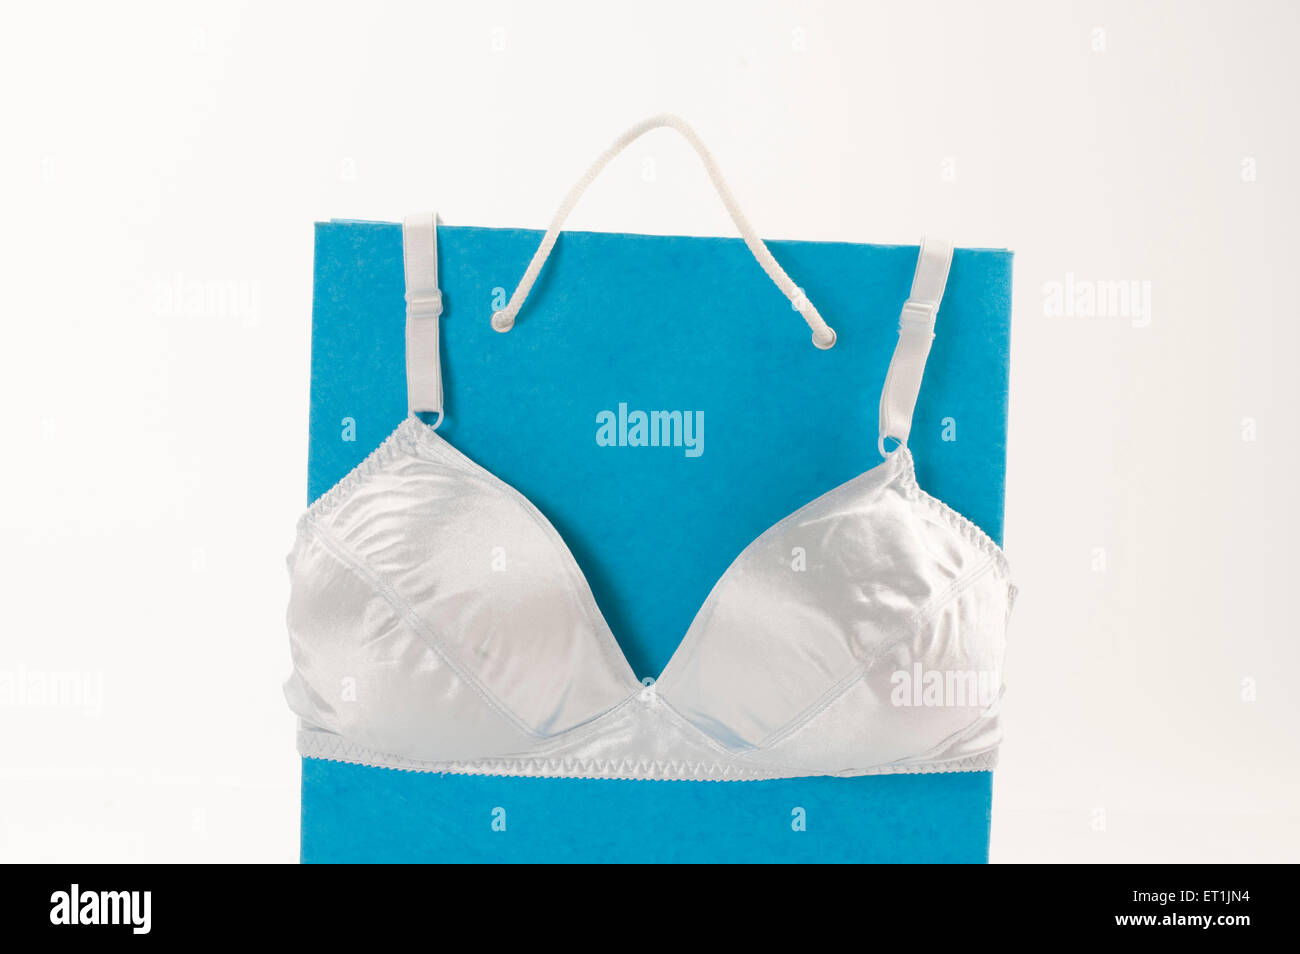 https://c8.alamy.com/comp/ET1JN4/shopping-bag-with-ladies-inner-wear-pune-maharashtra-india-asia-place-ET1JN4.jpg